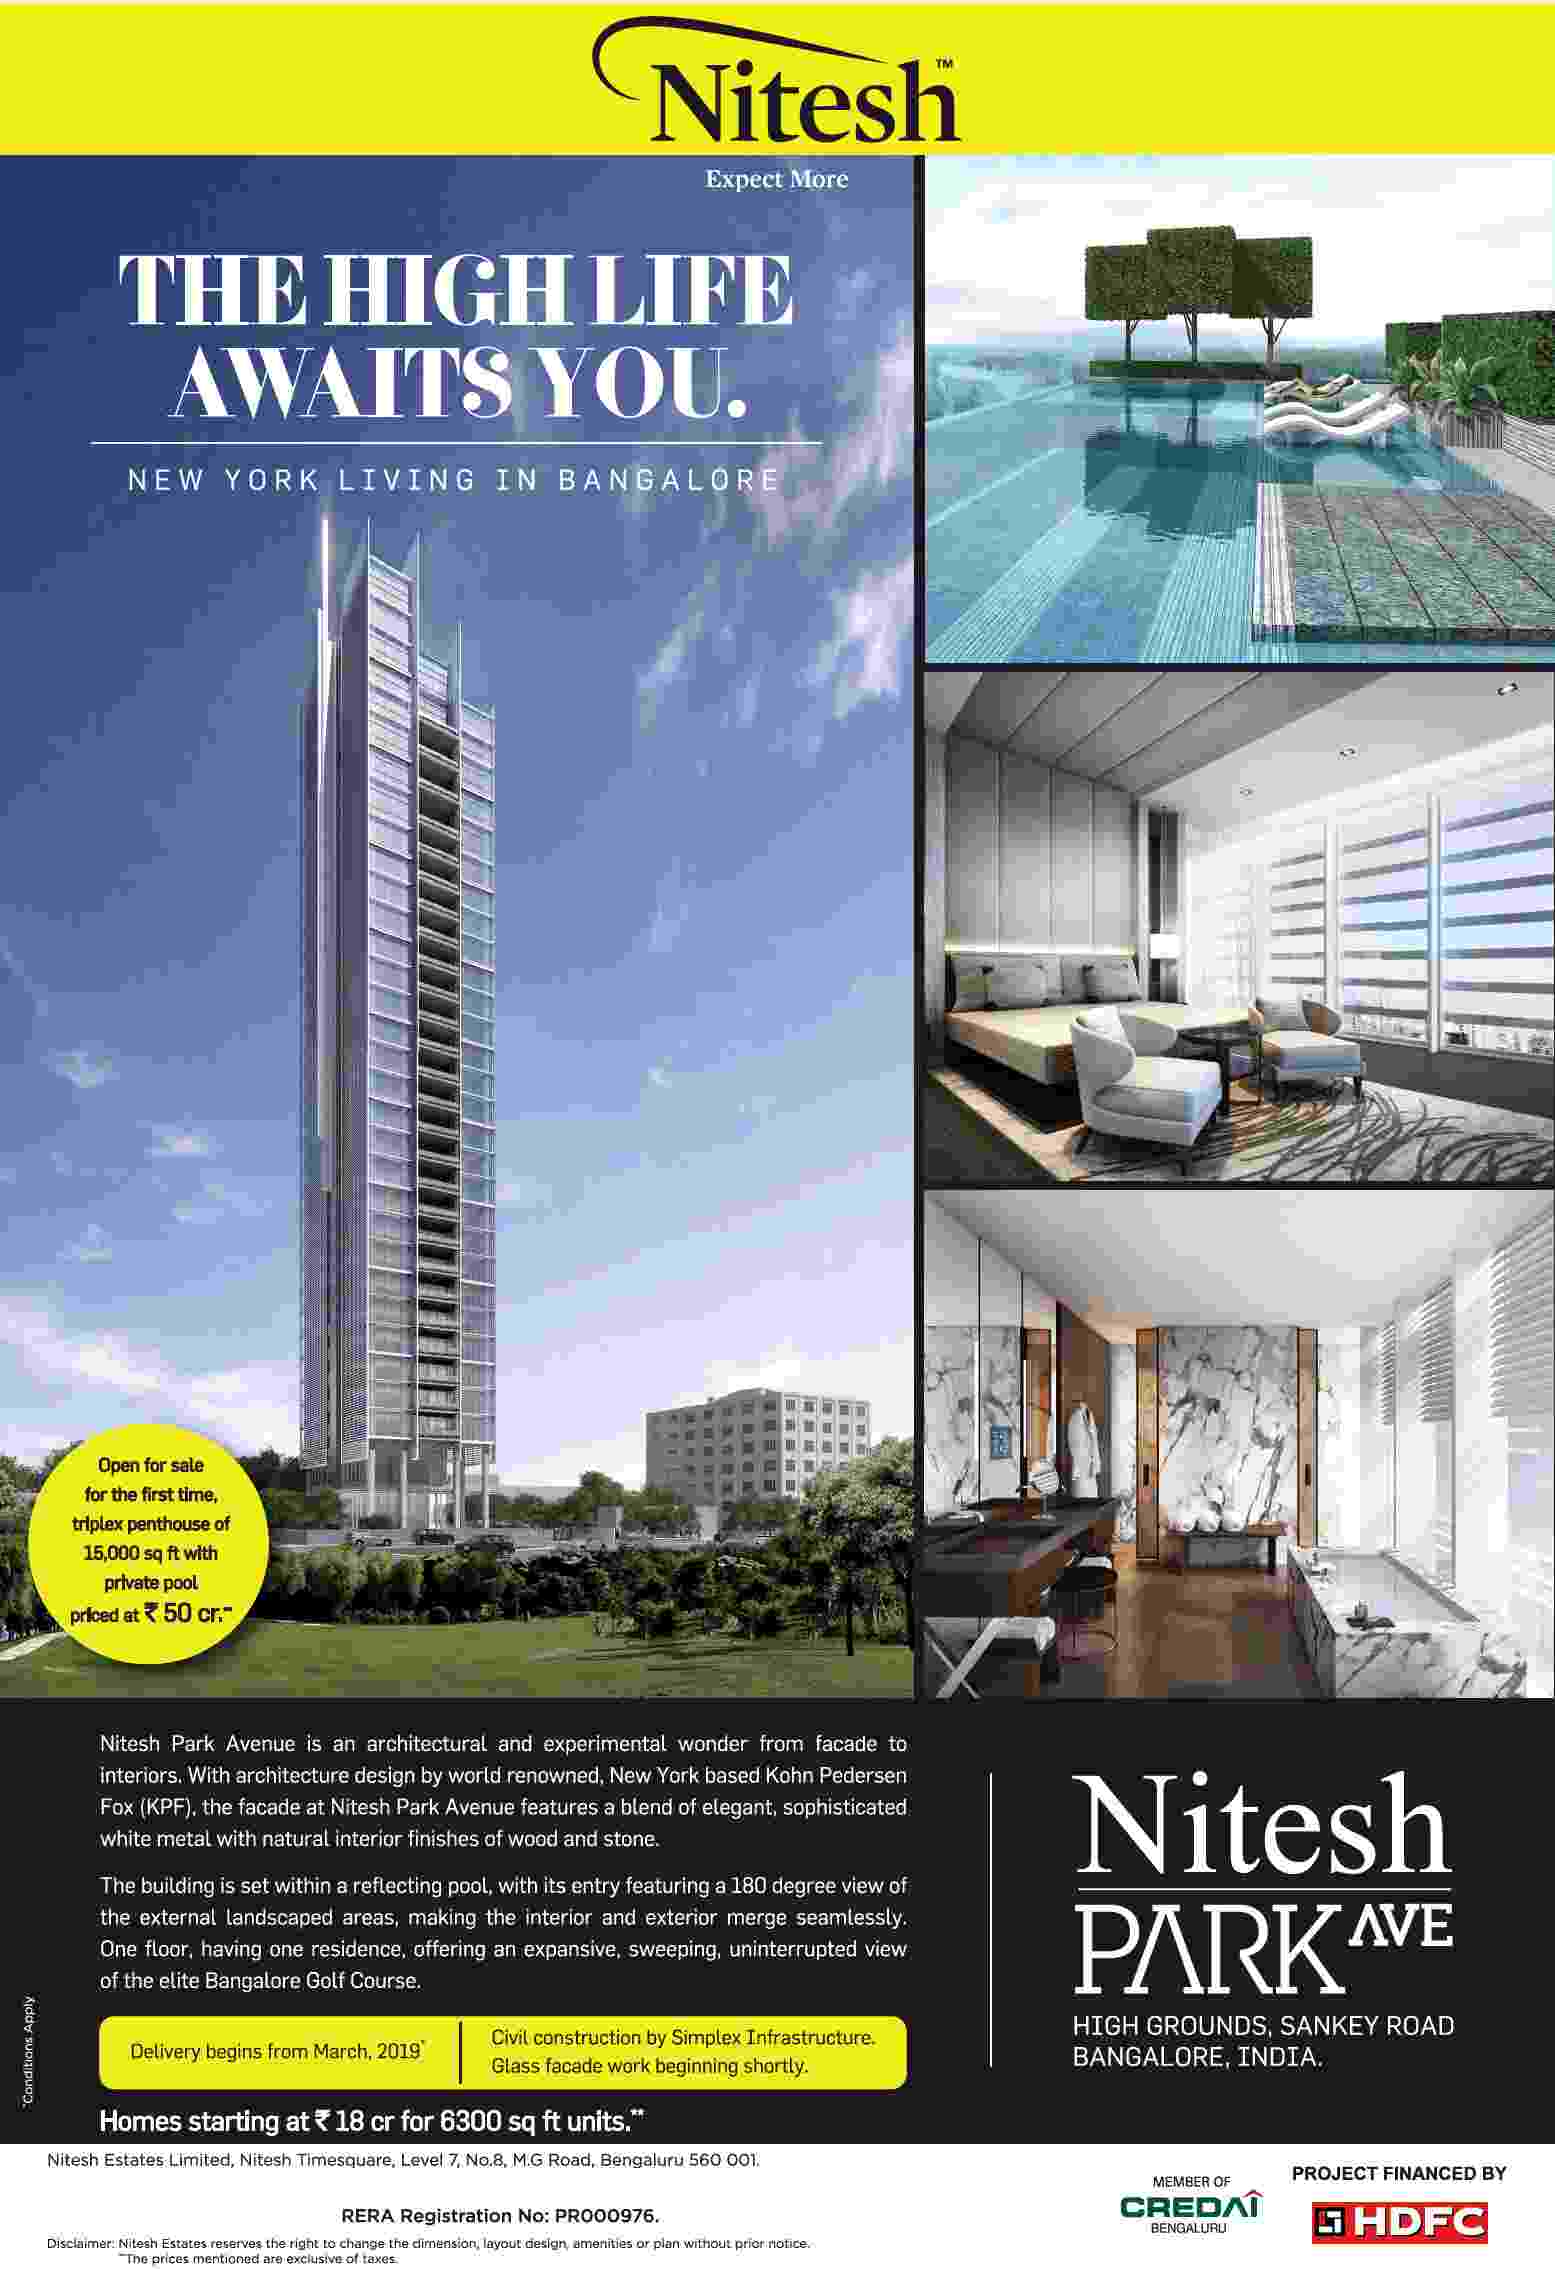 The high life awaits you at Nitesh Park Avenue in Bangalore